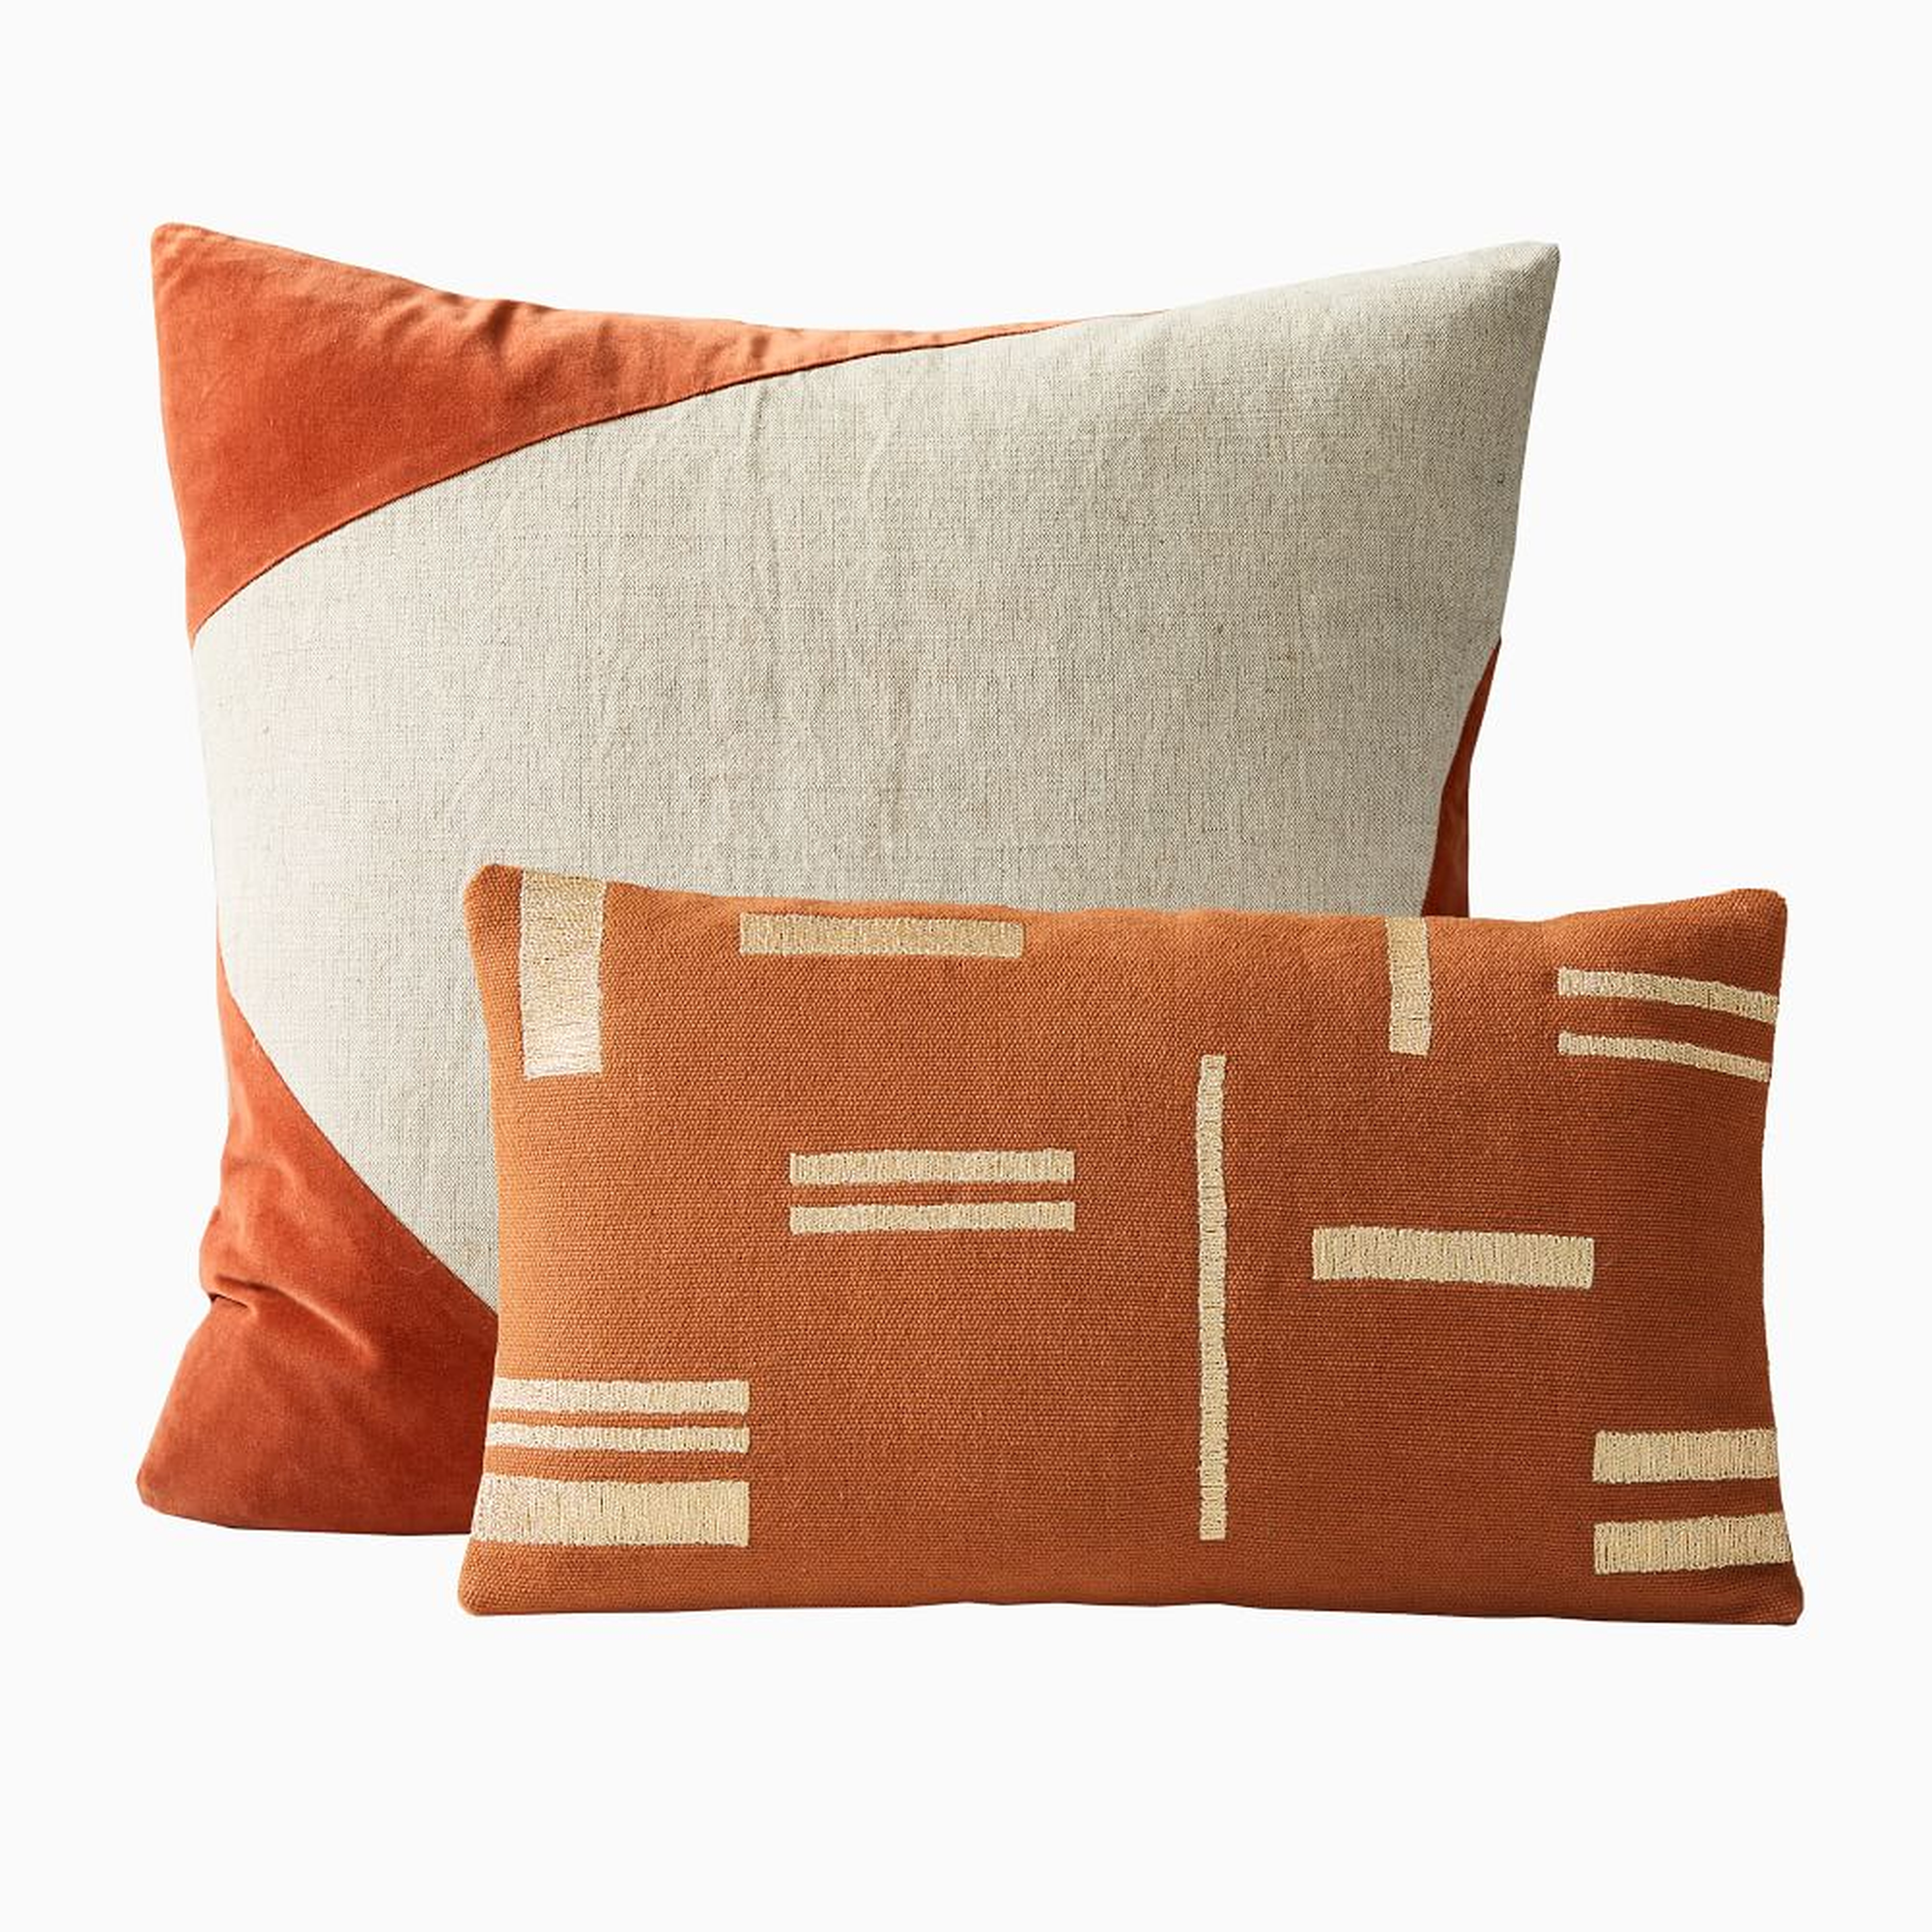 Cotton Linen & Velvet Corners & Metallic Blocks Pillow Cover Set, Copper, Set of 2 - West Elm